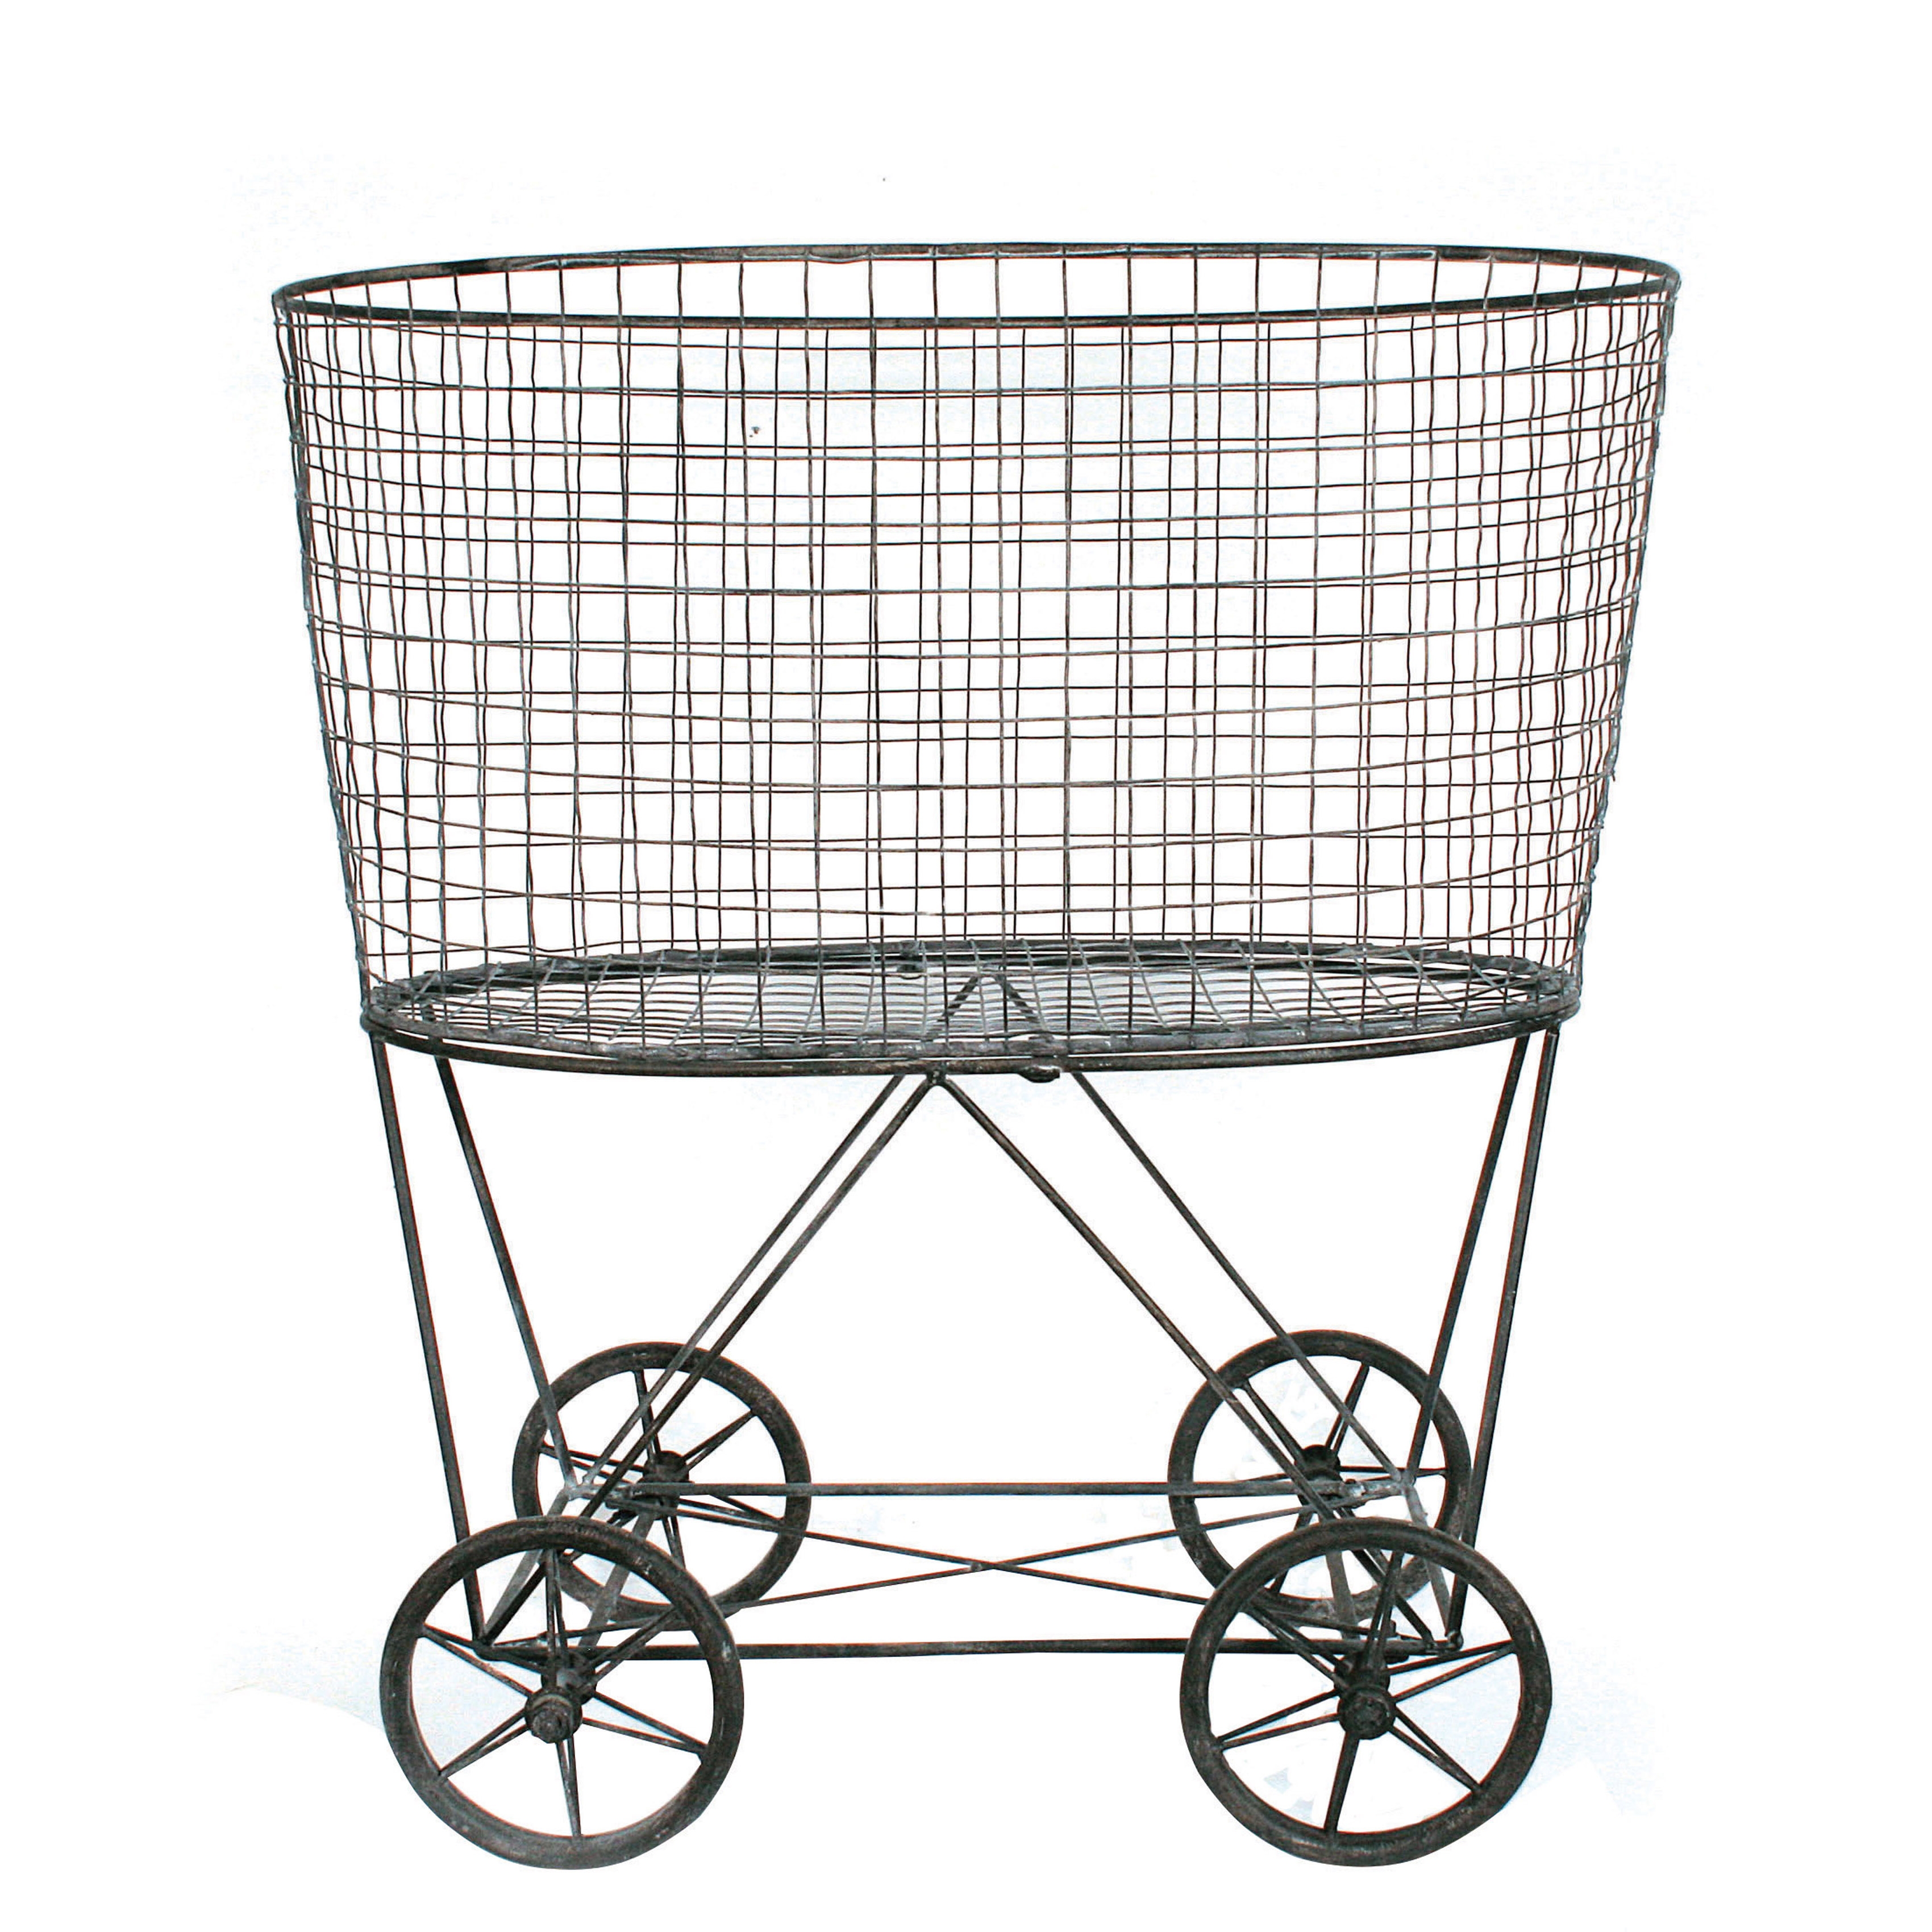 Vintage Metal Laundry Basket with Wheels - Image 0